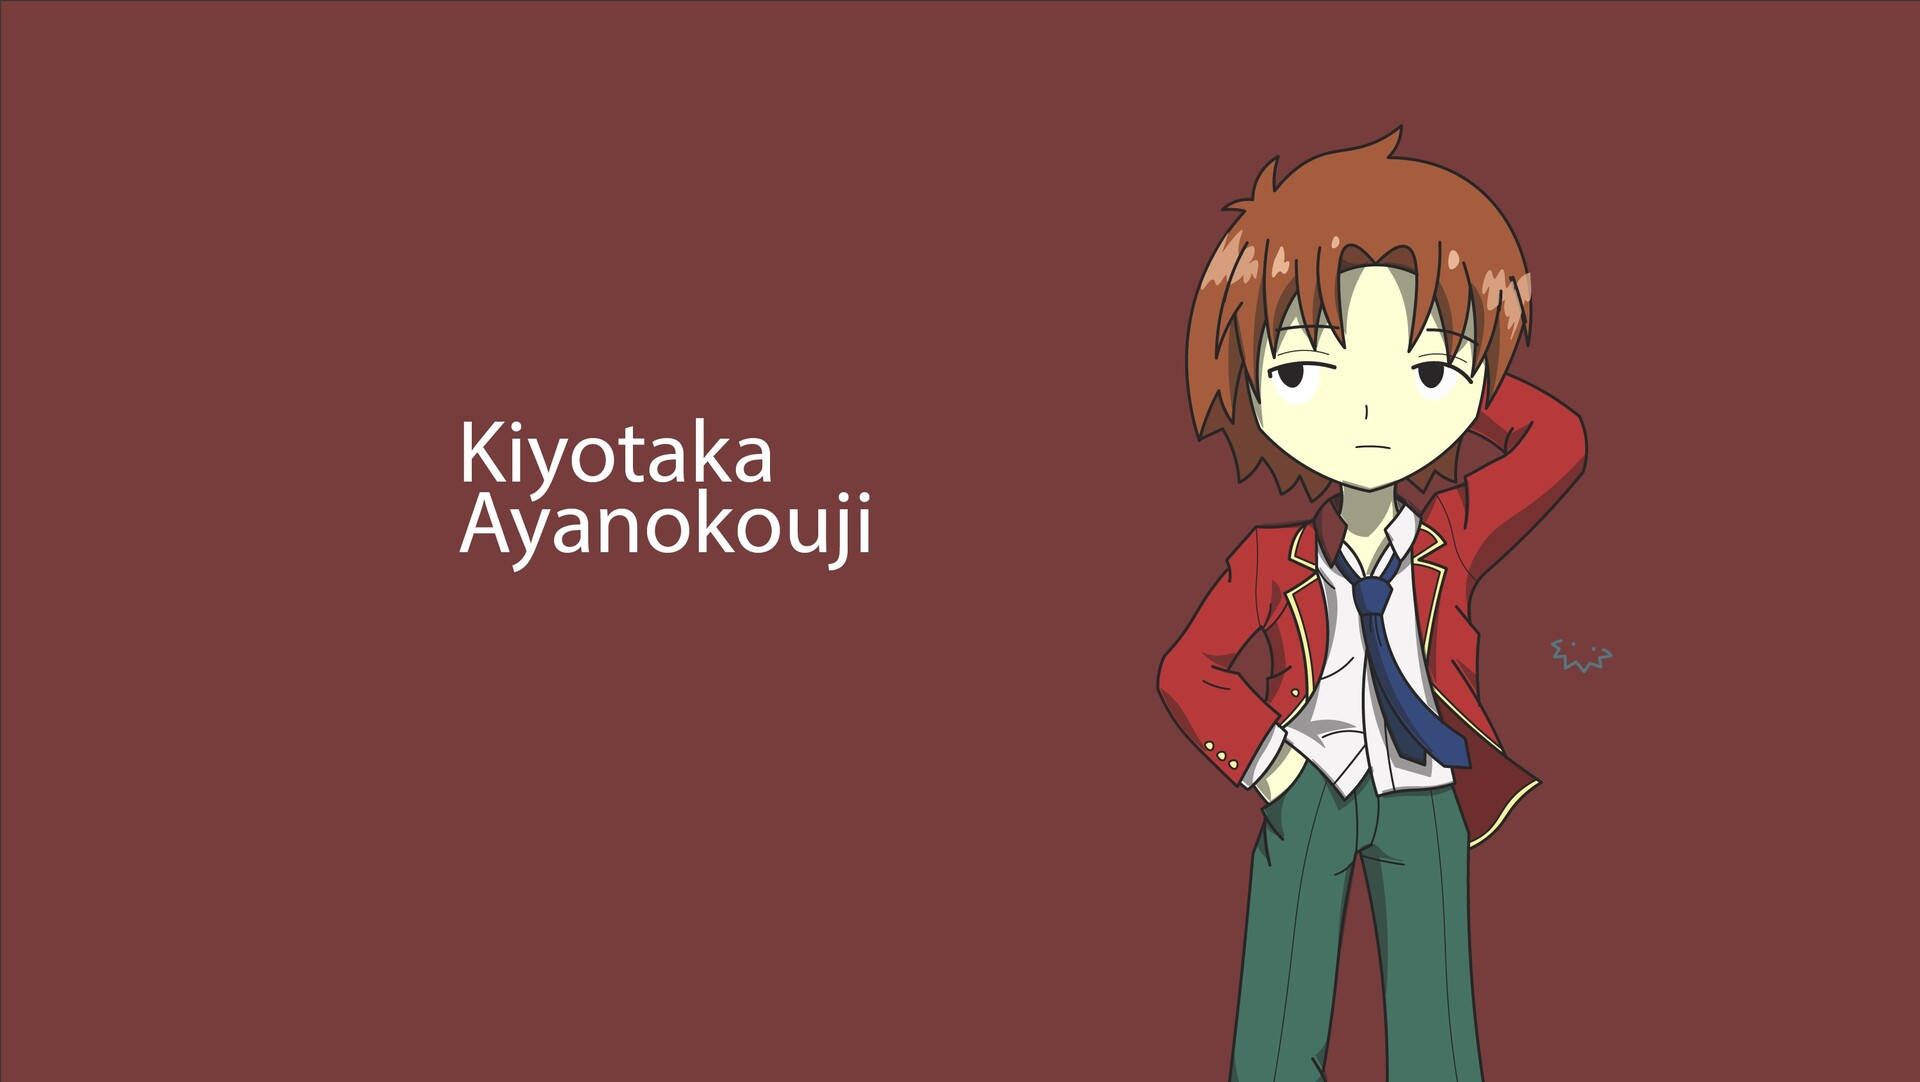 Kiyotaka Ayanokoji Chibi Background